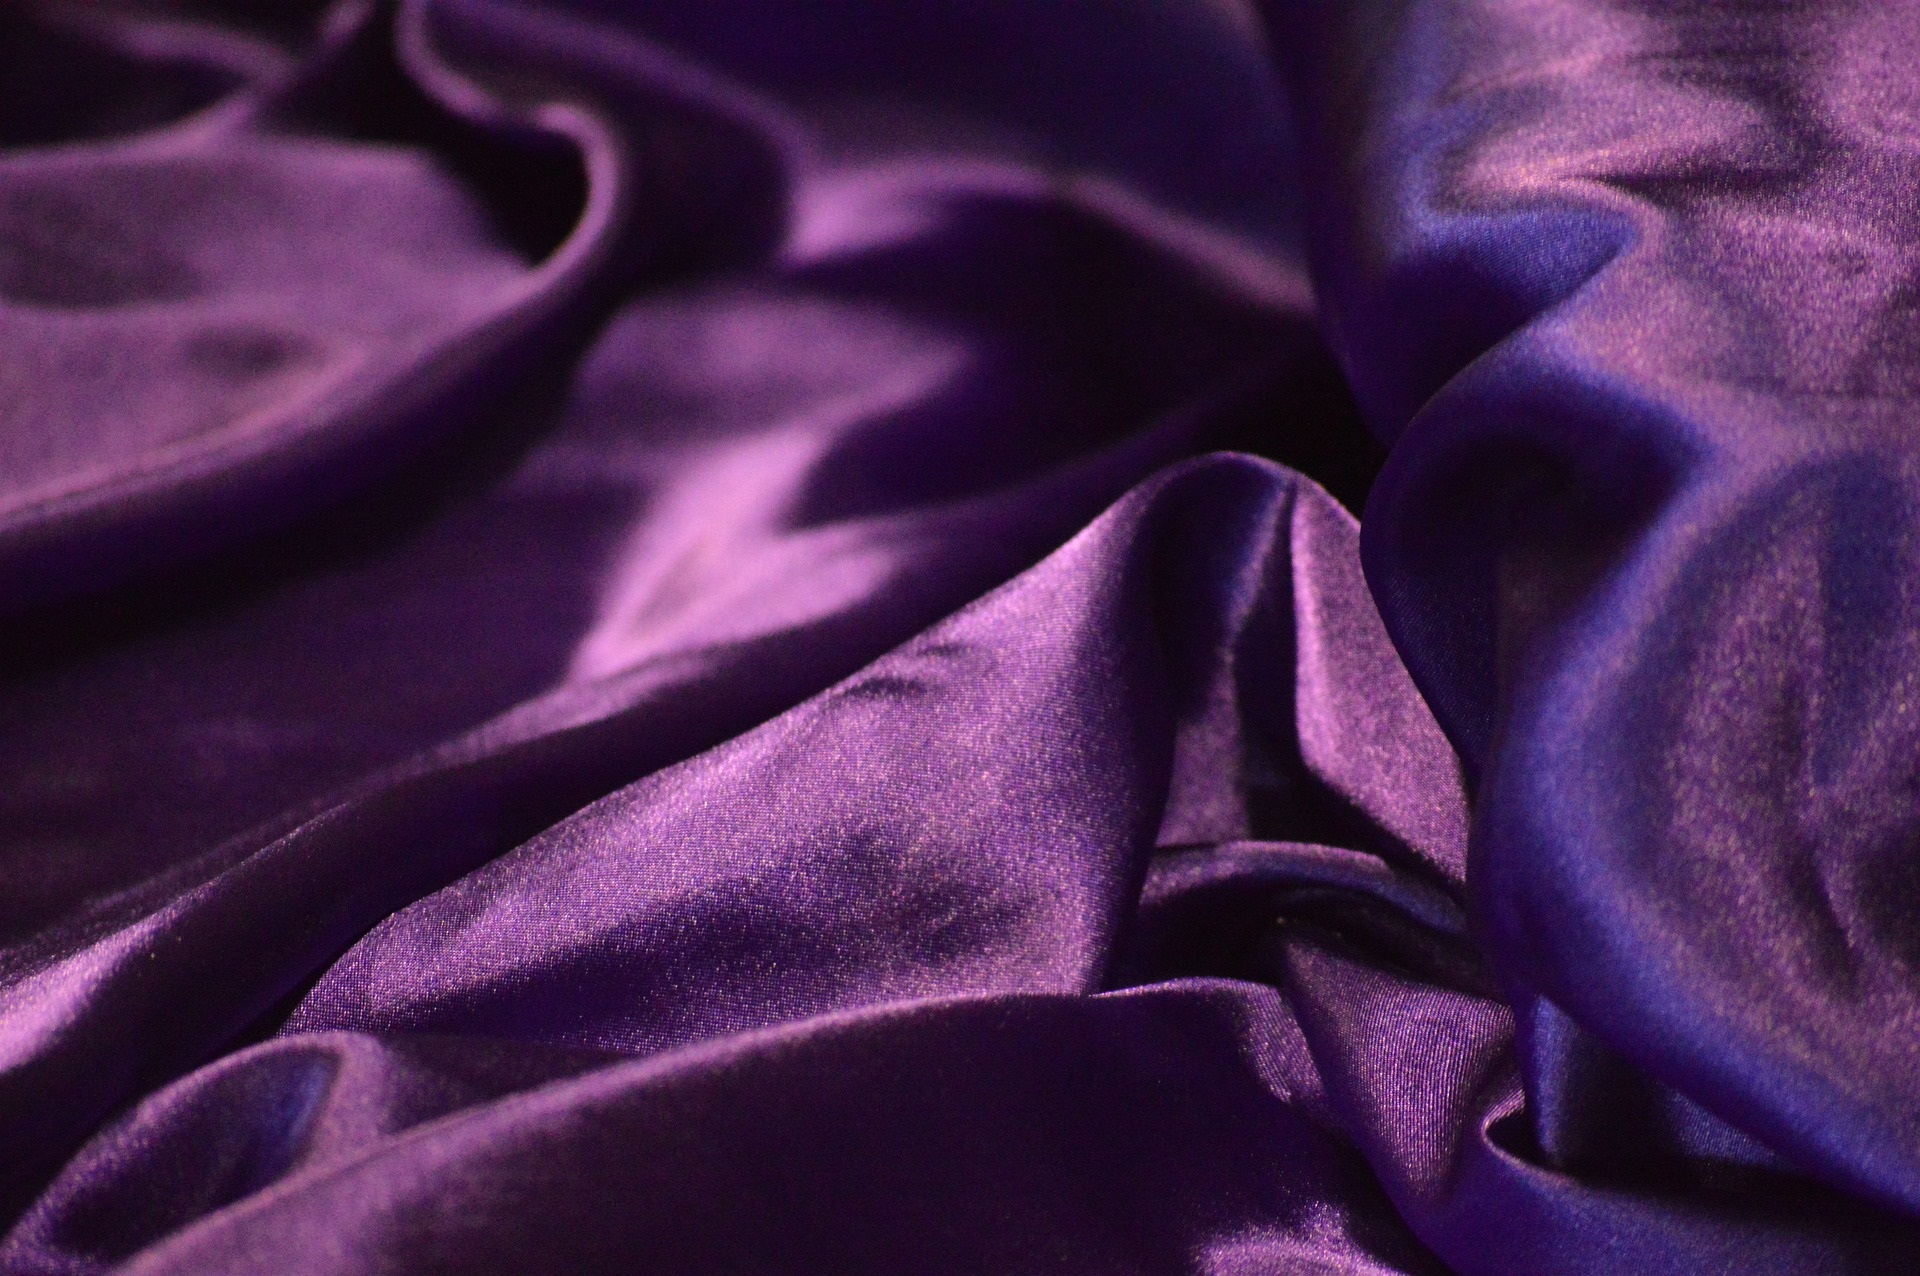 purple silk